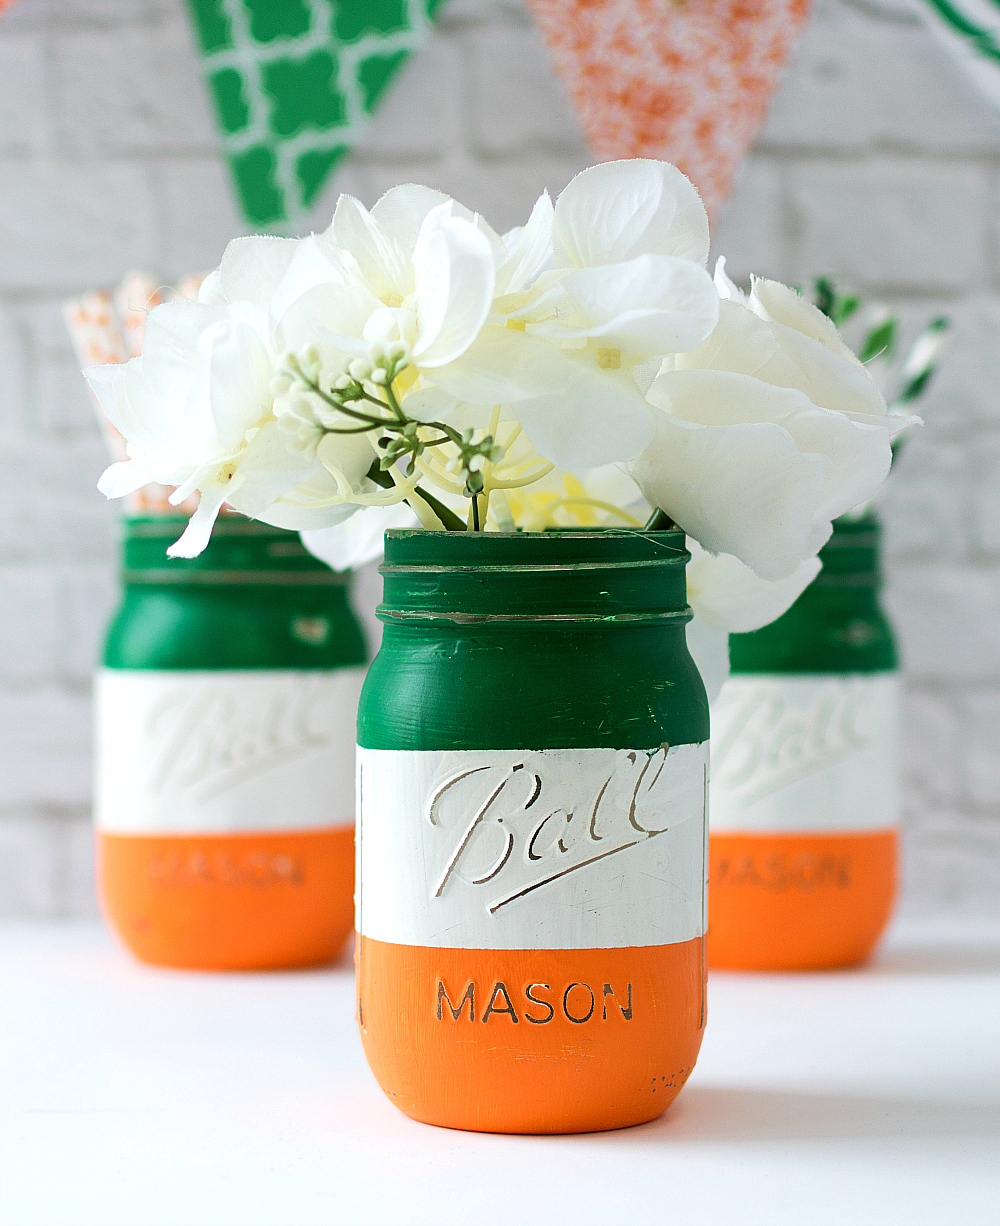 Mason Jar Craft Ideas for St Patrick's Day